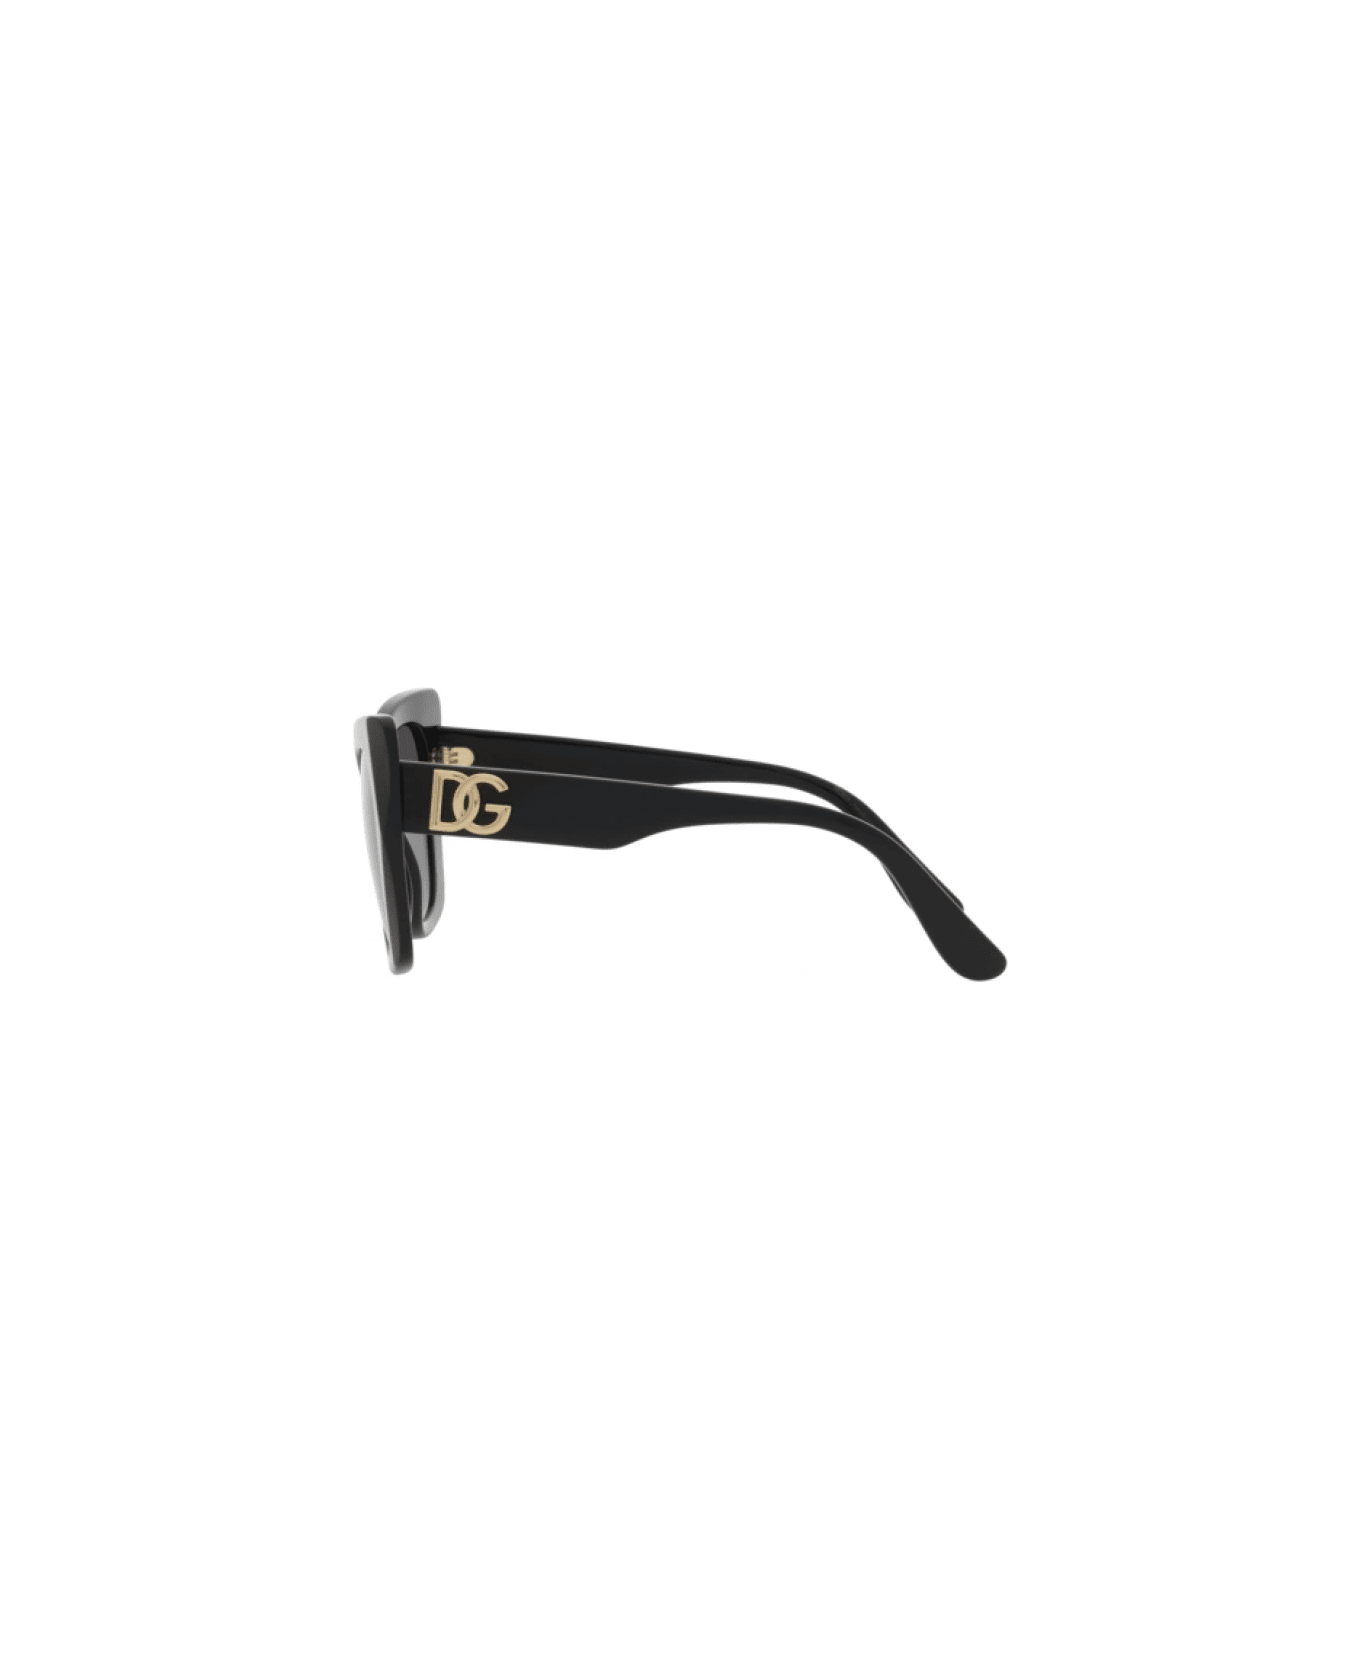 Dolce & Gabbana Eyewear dg4405 Sunglasses